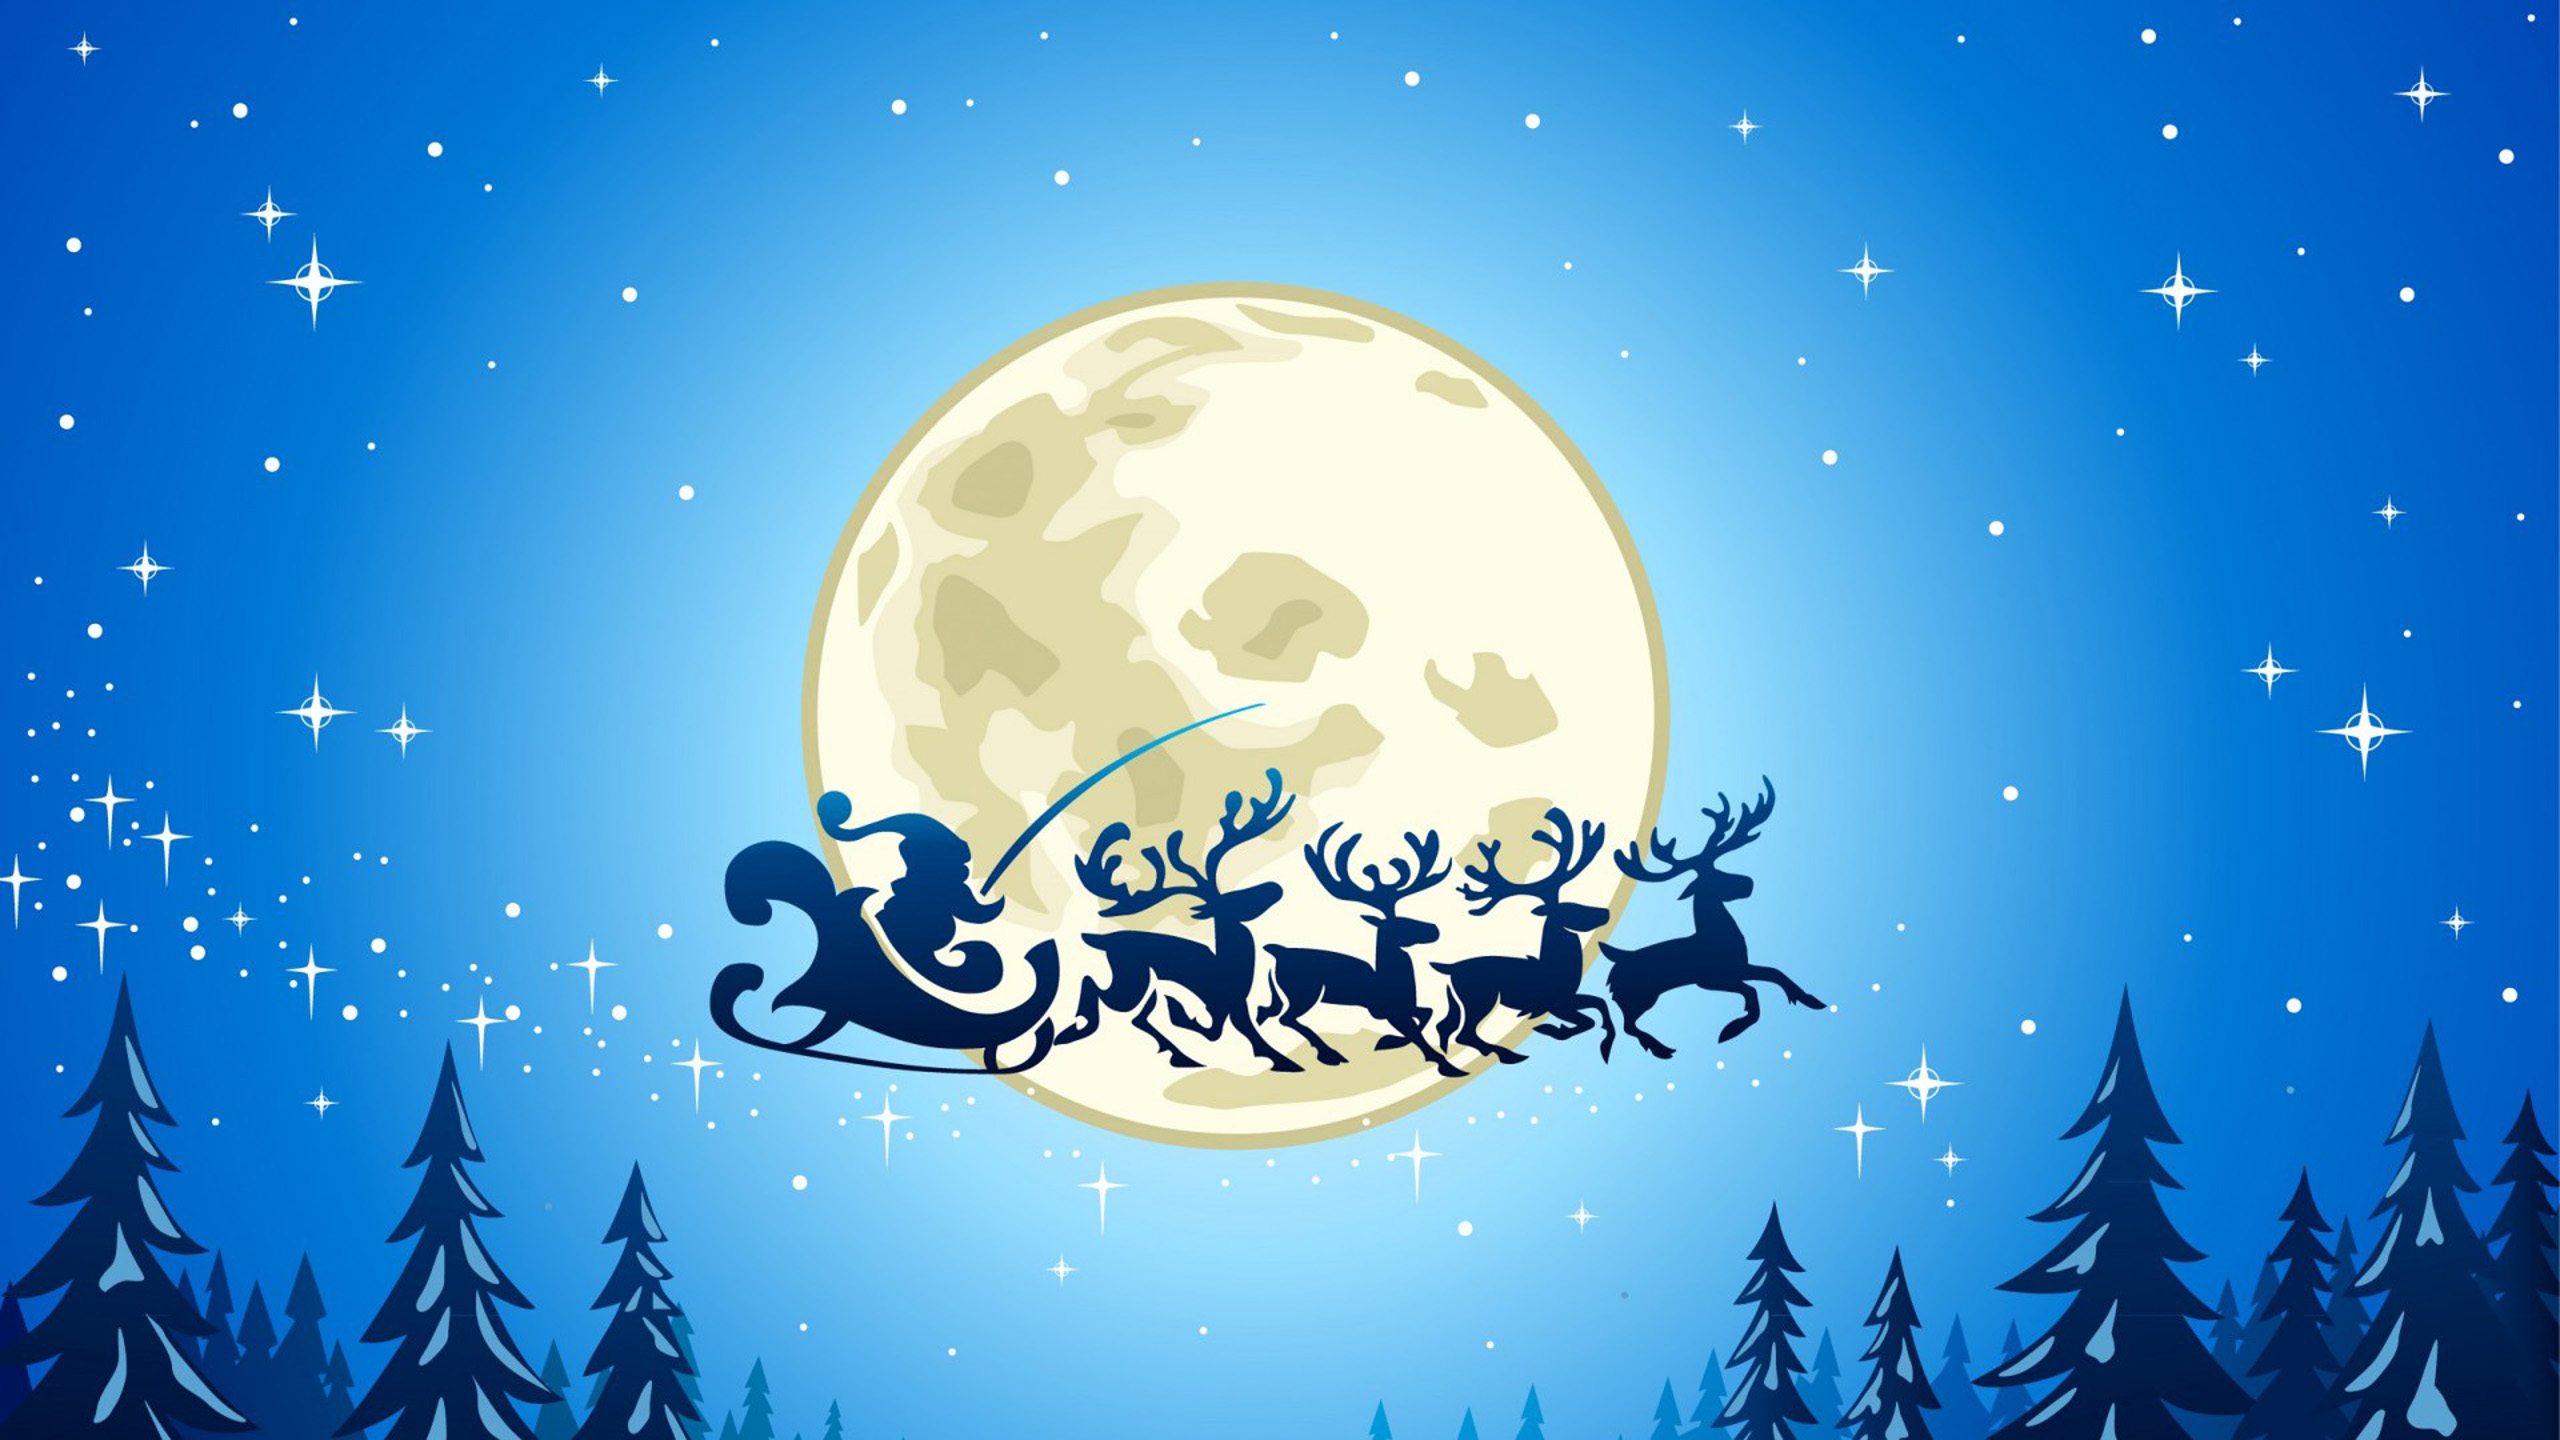 Wallpaper Christmas Themes Background – Fun for Christmas